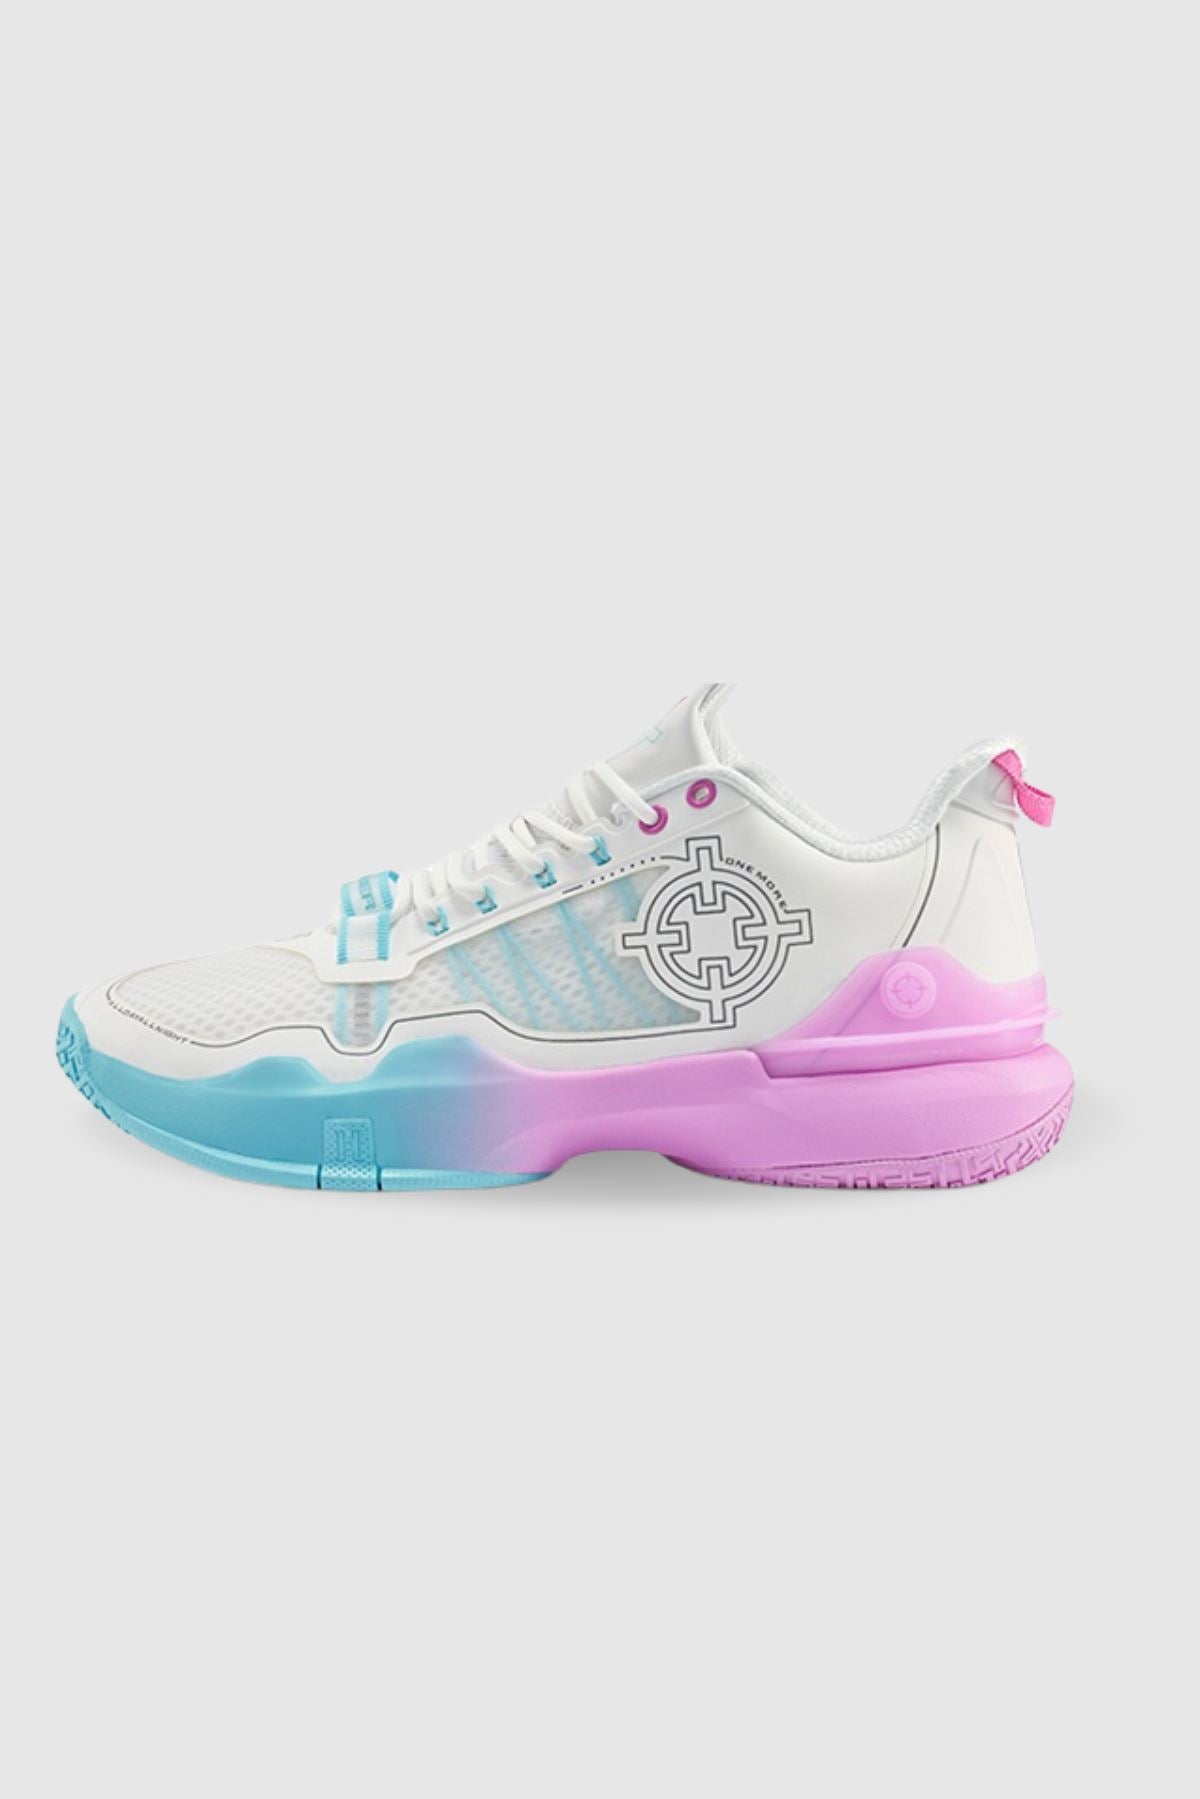 "Air Sac" Basketball Shoes Rigorer Bubblegum EU39 